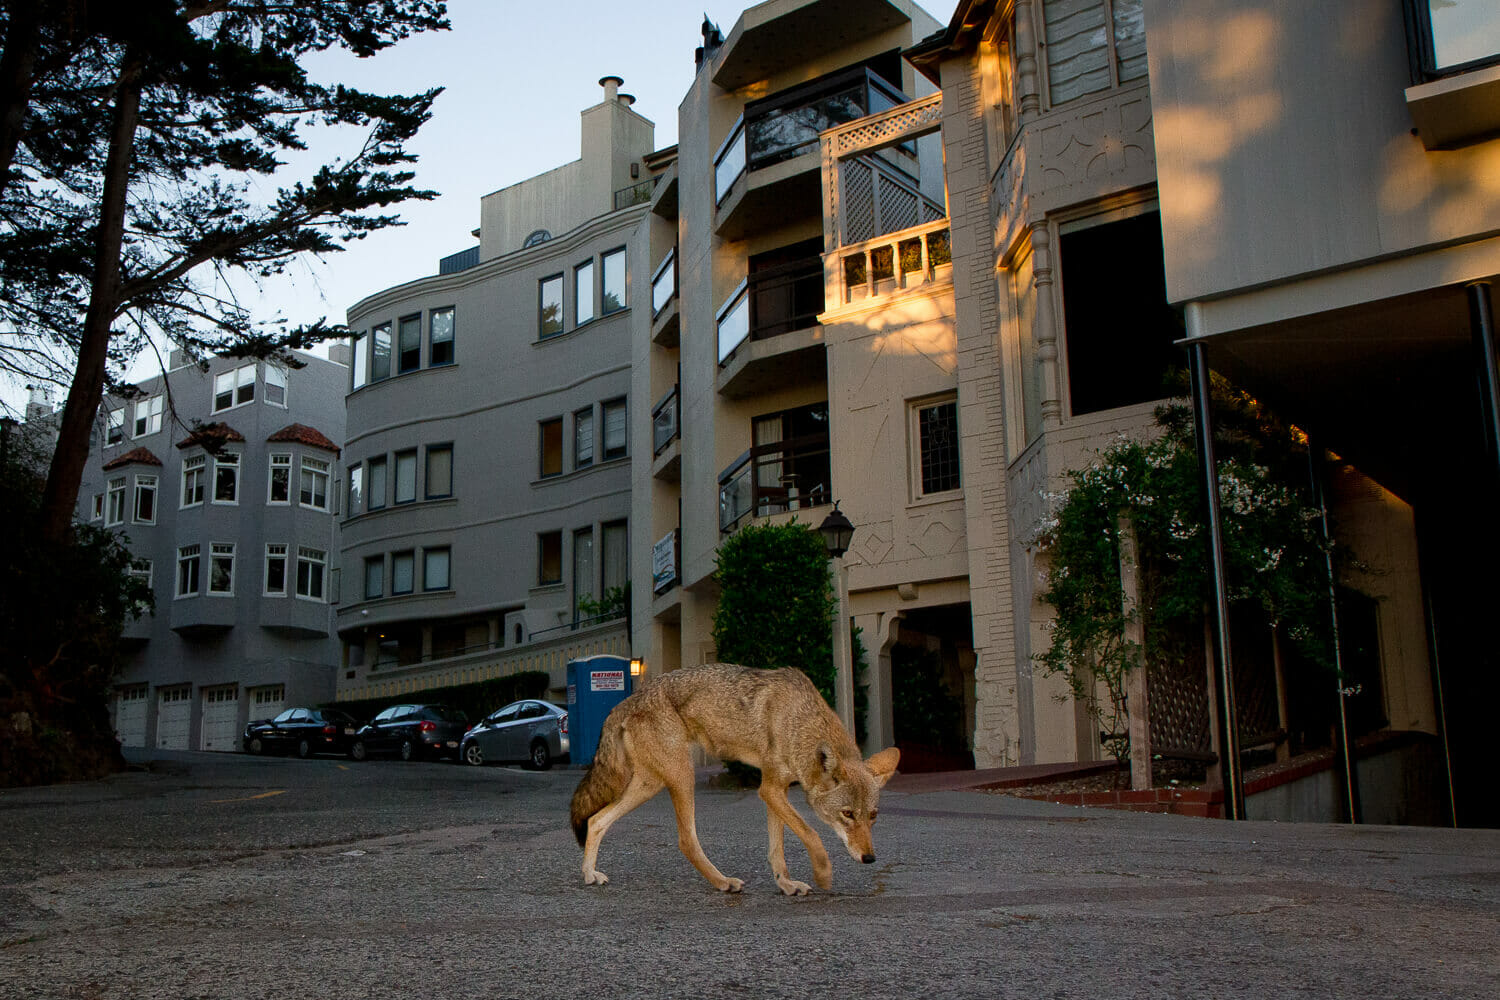 An urban coyote walks across a road near an apartment building